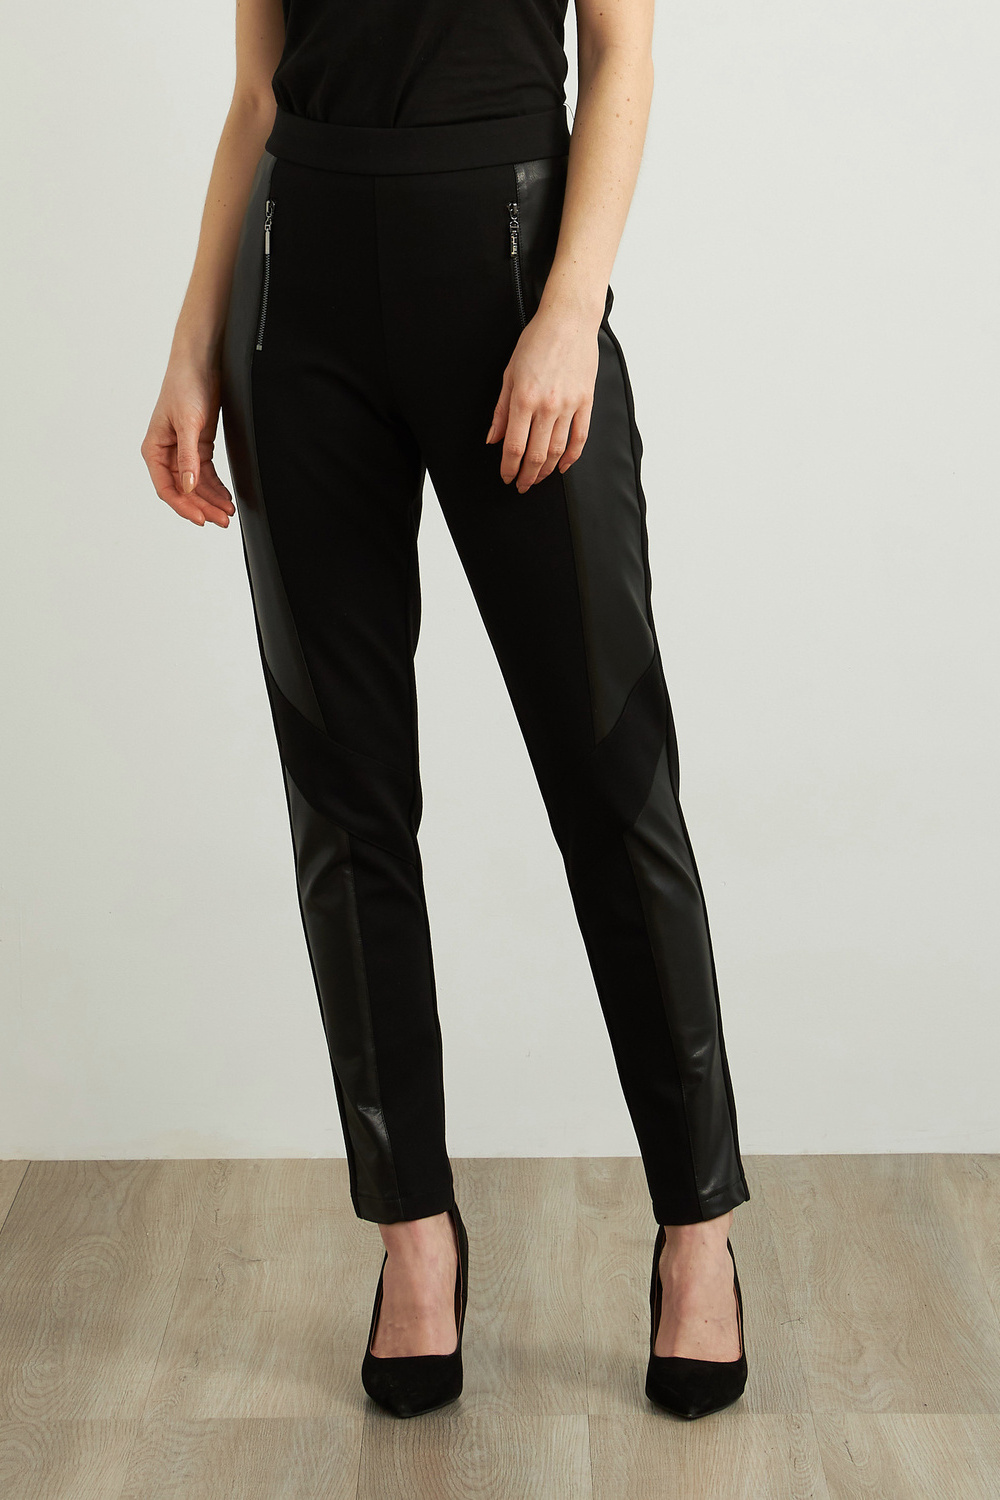 Joseph Ribkoff Faux Leather Pants Style 213385. Black